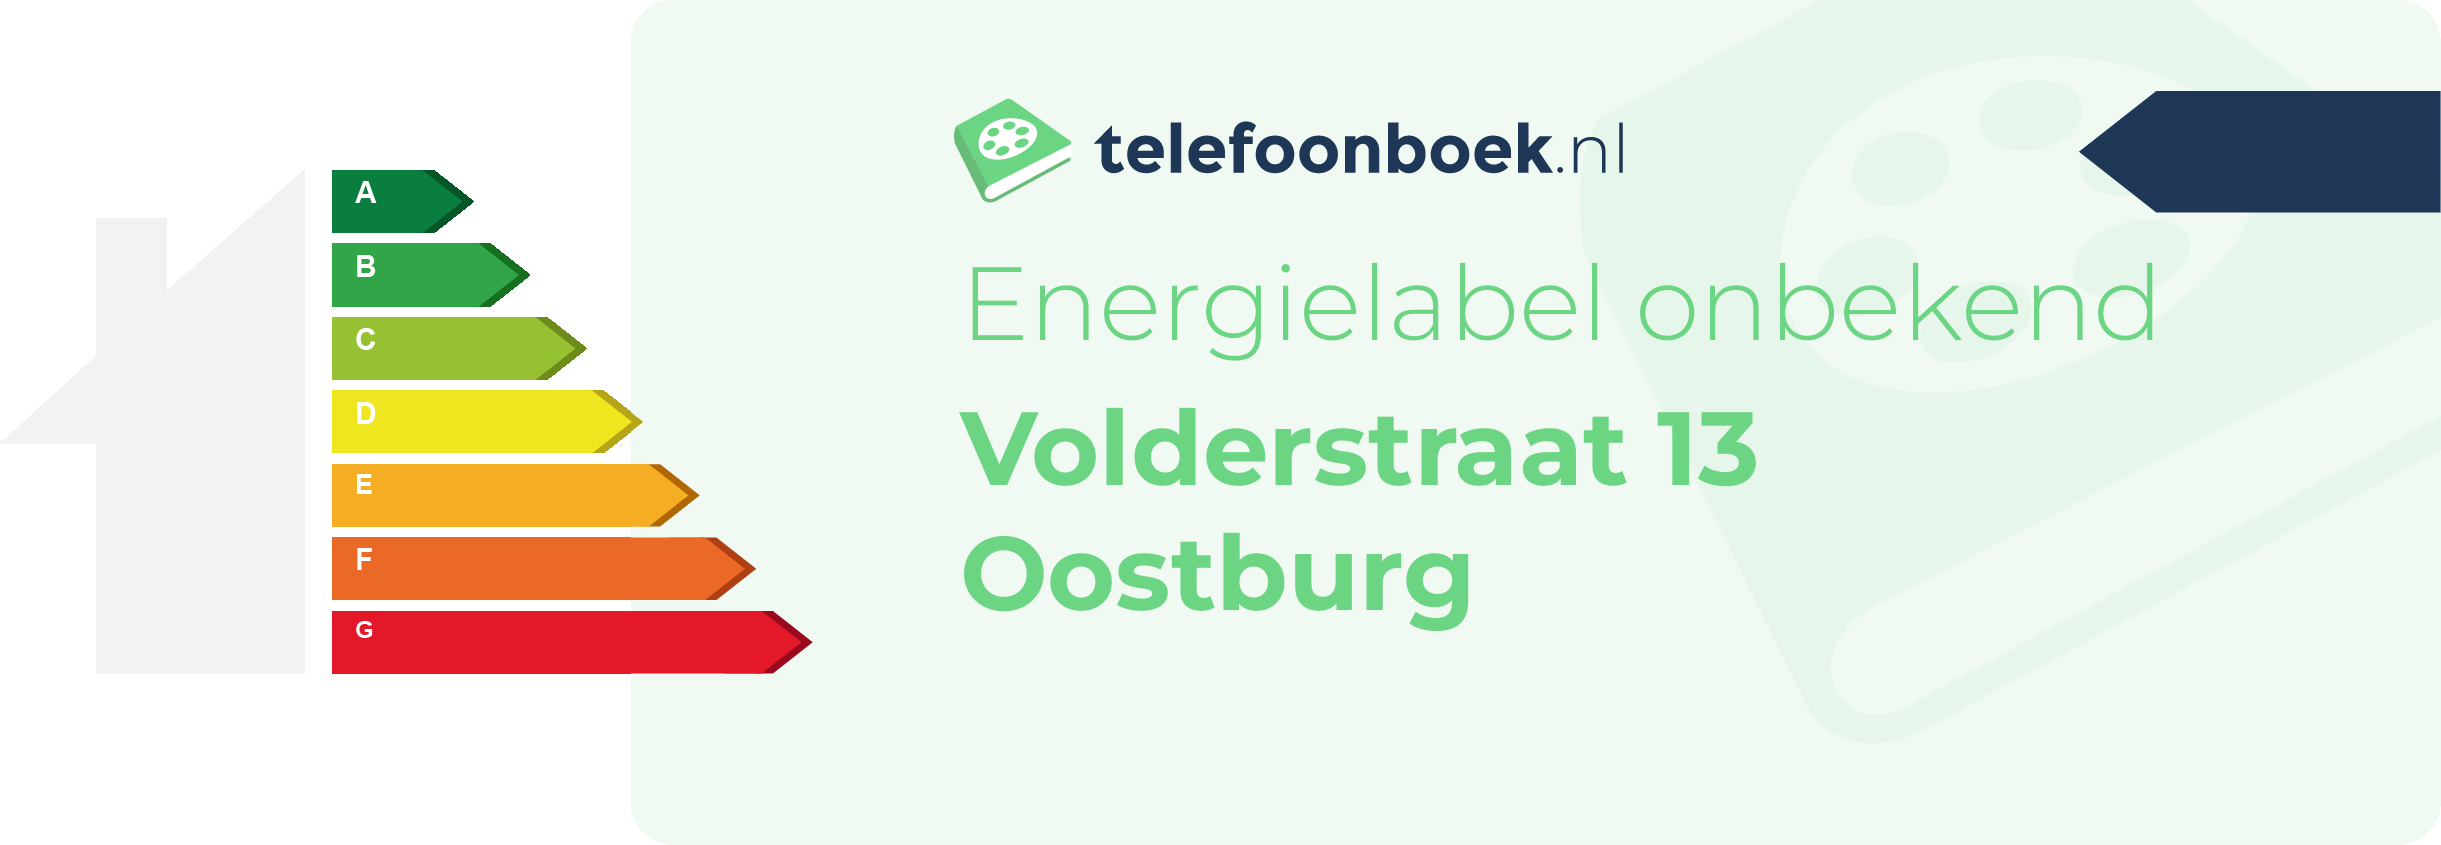 Energielabel Volderstraat 13 Oostburg